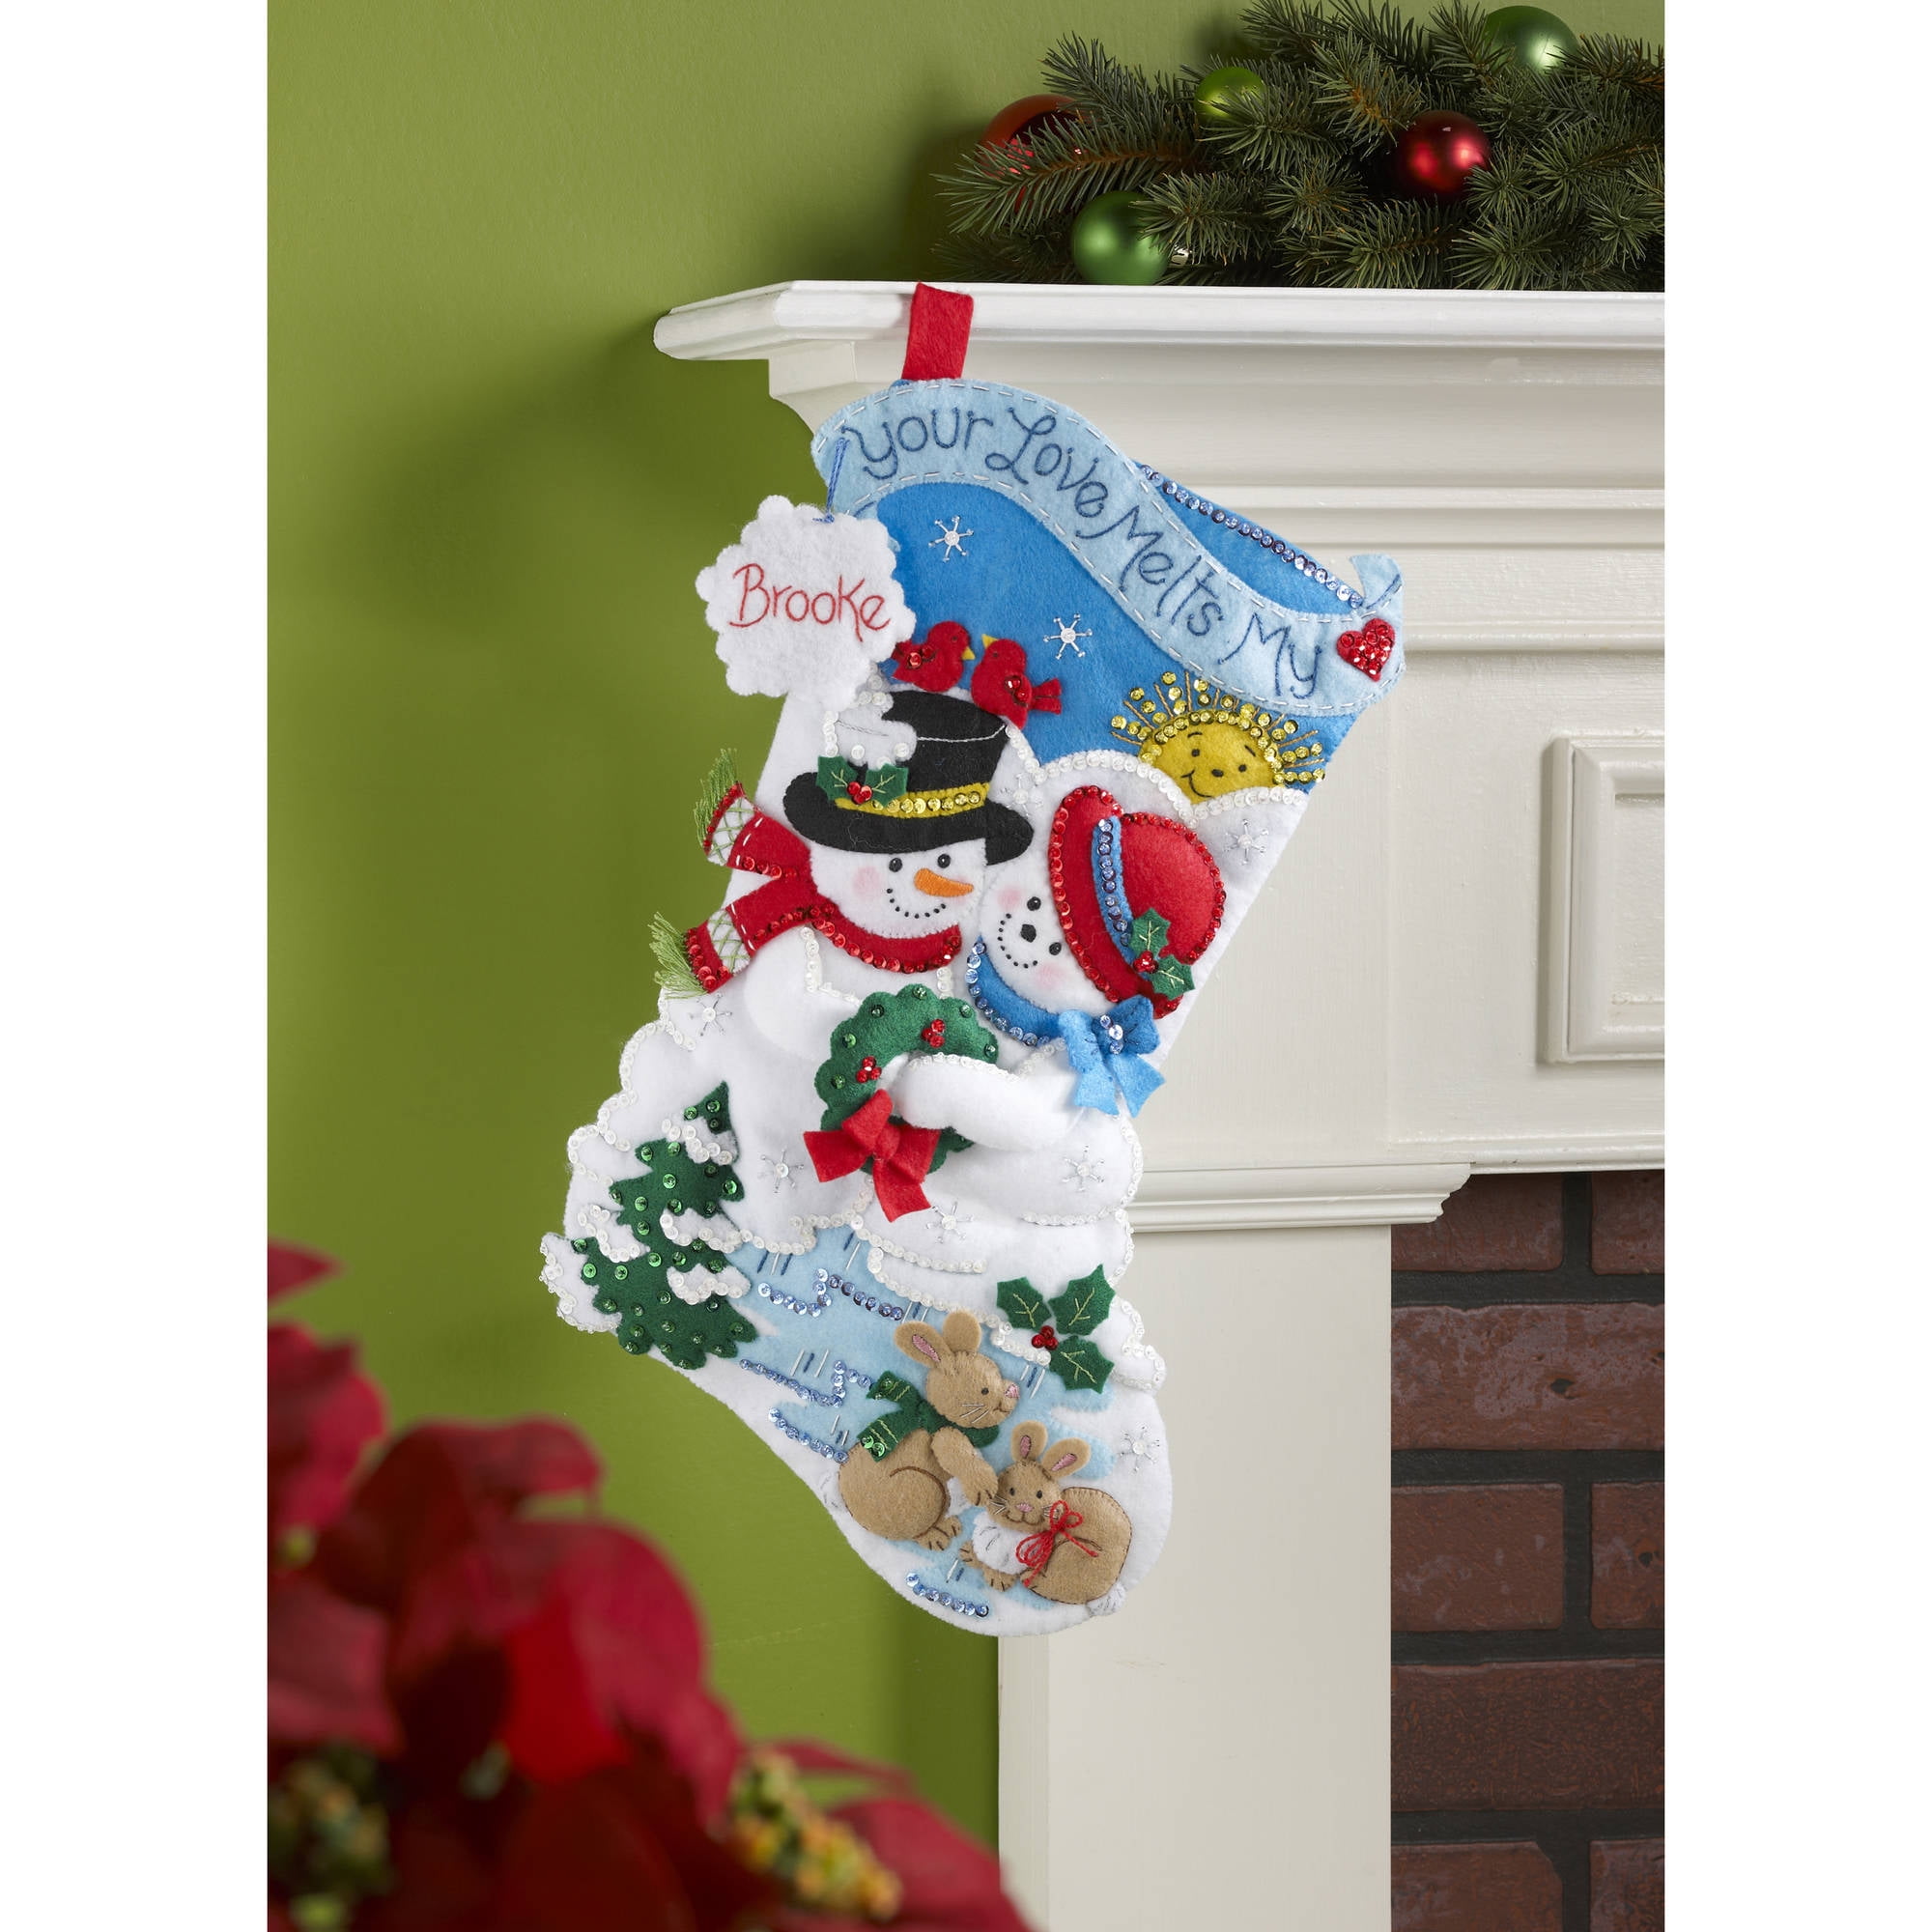 Shop Plaid Bucilla ® Seasonal - Felt - Stocking Kits - Moonlight